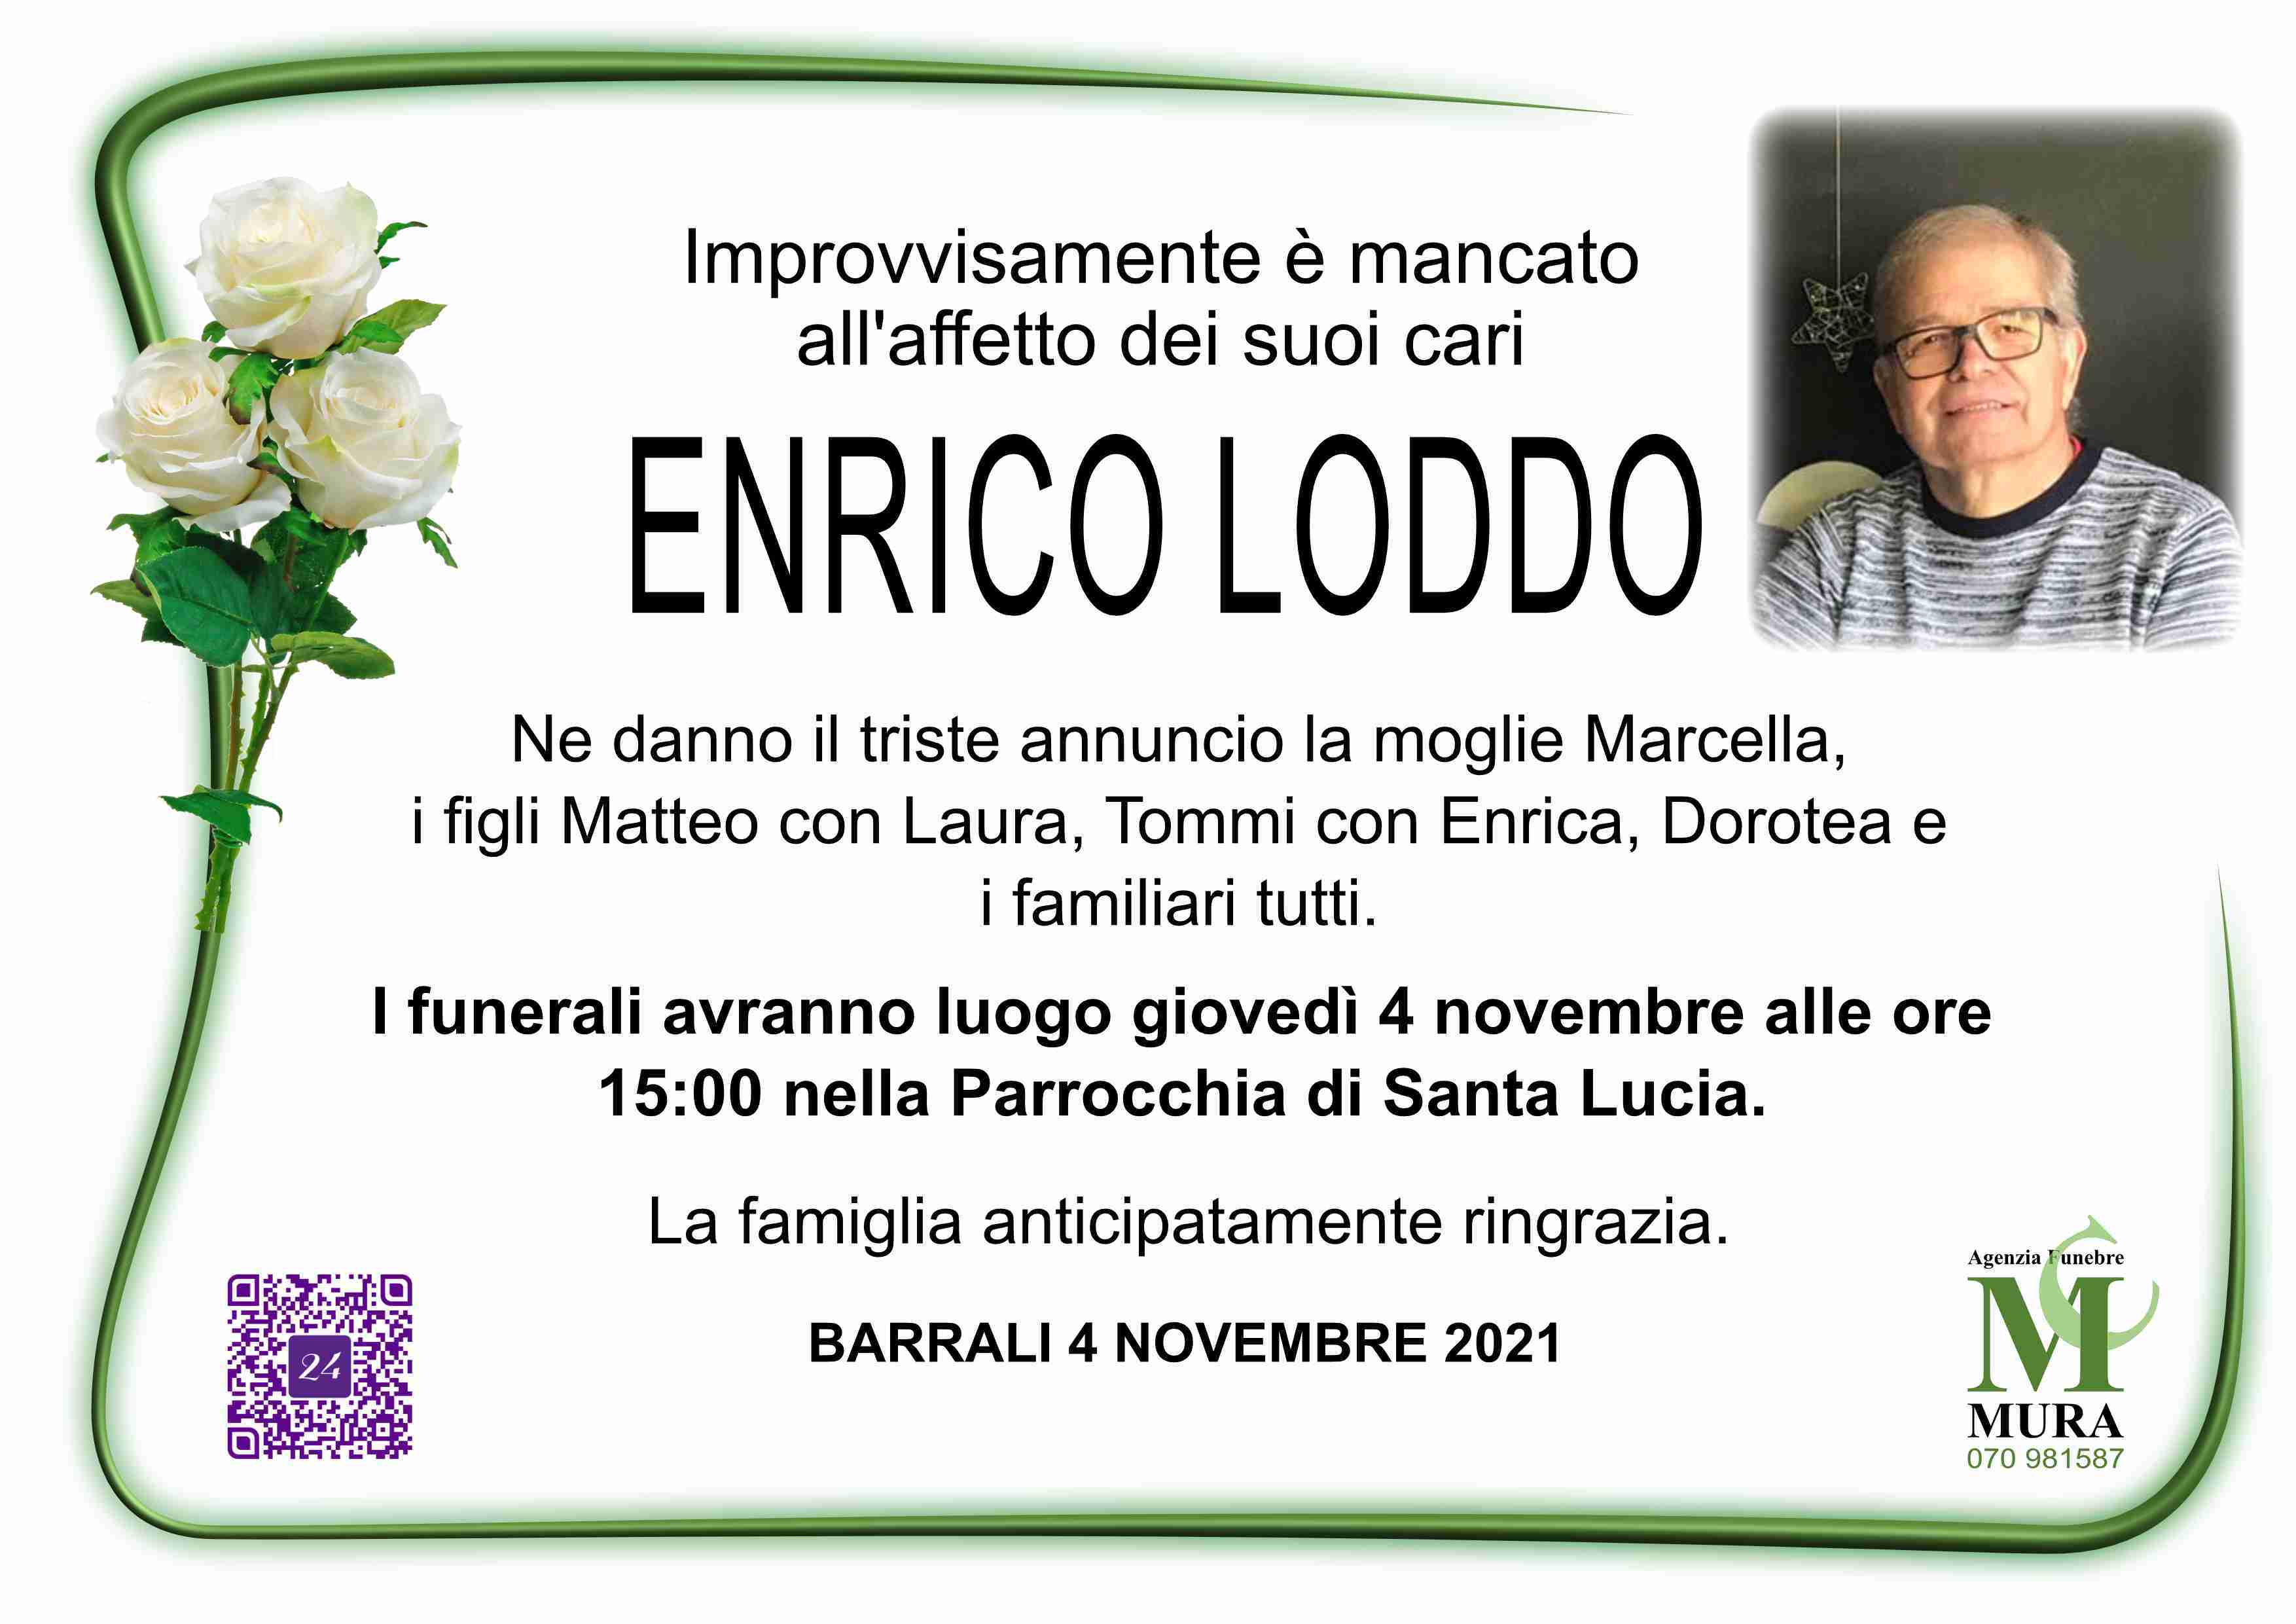 Enrico Loddo